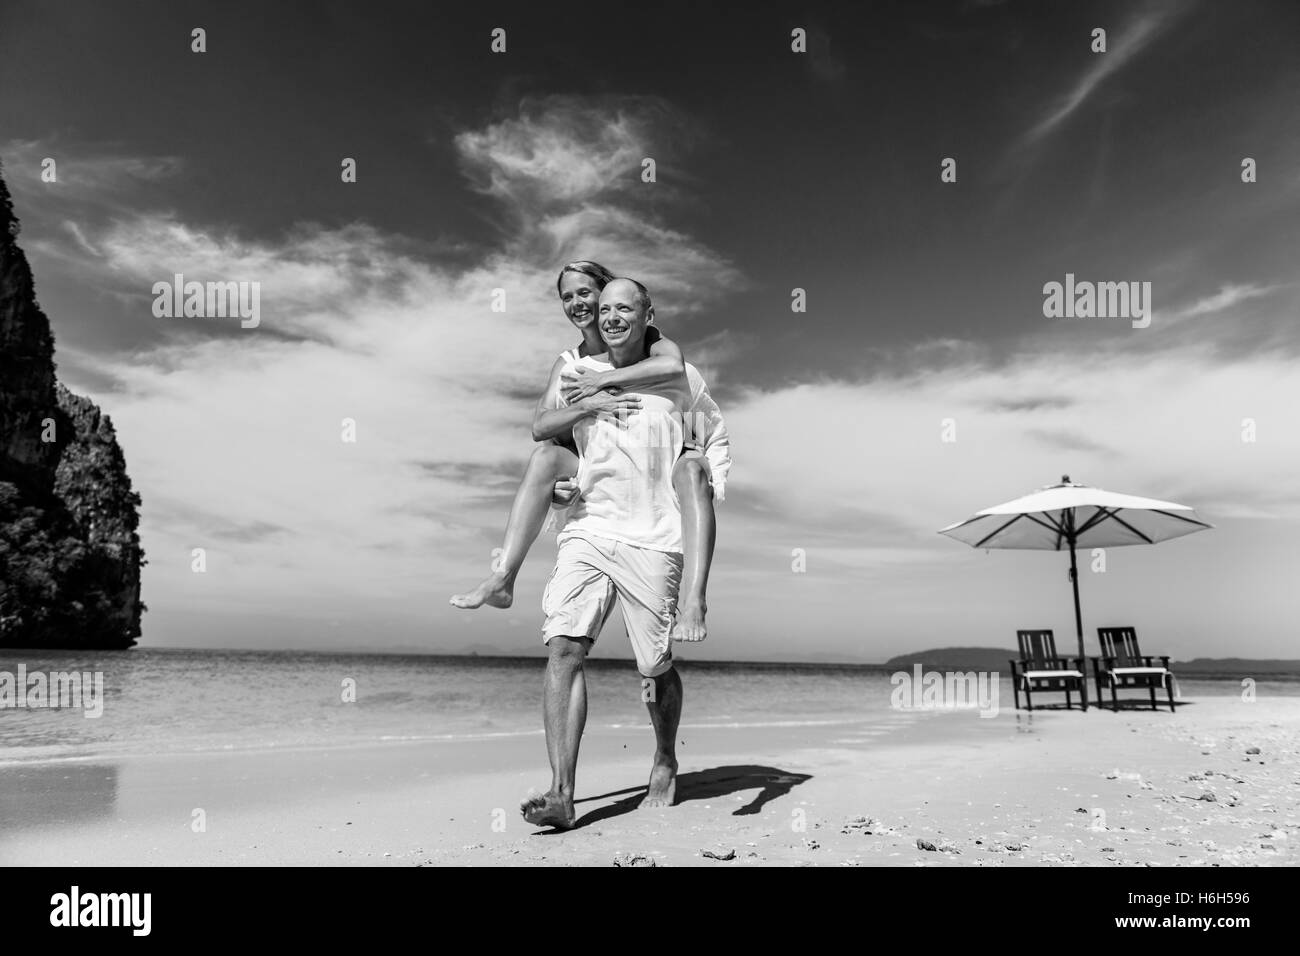 Couple Romance Beach Love Island Concept Stock Photo